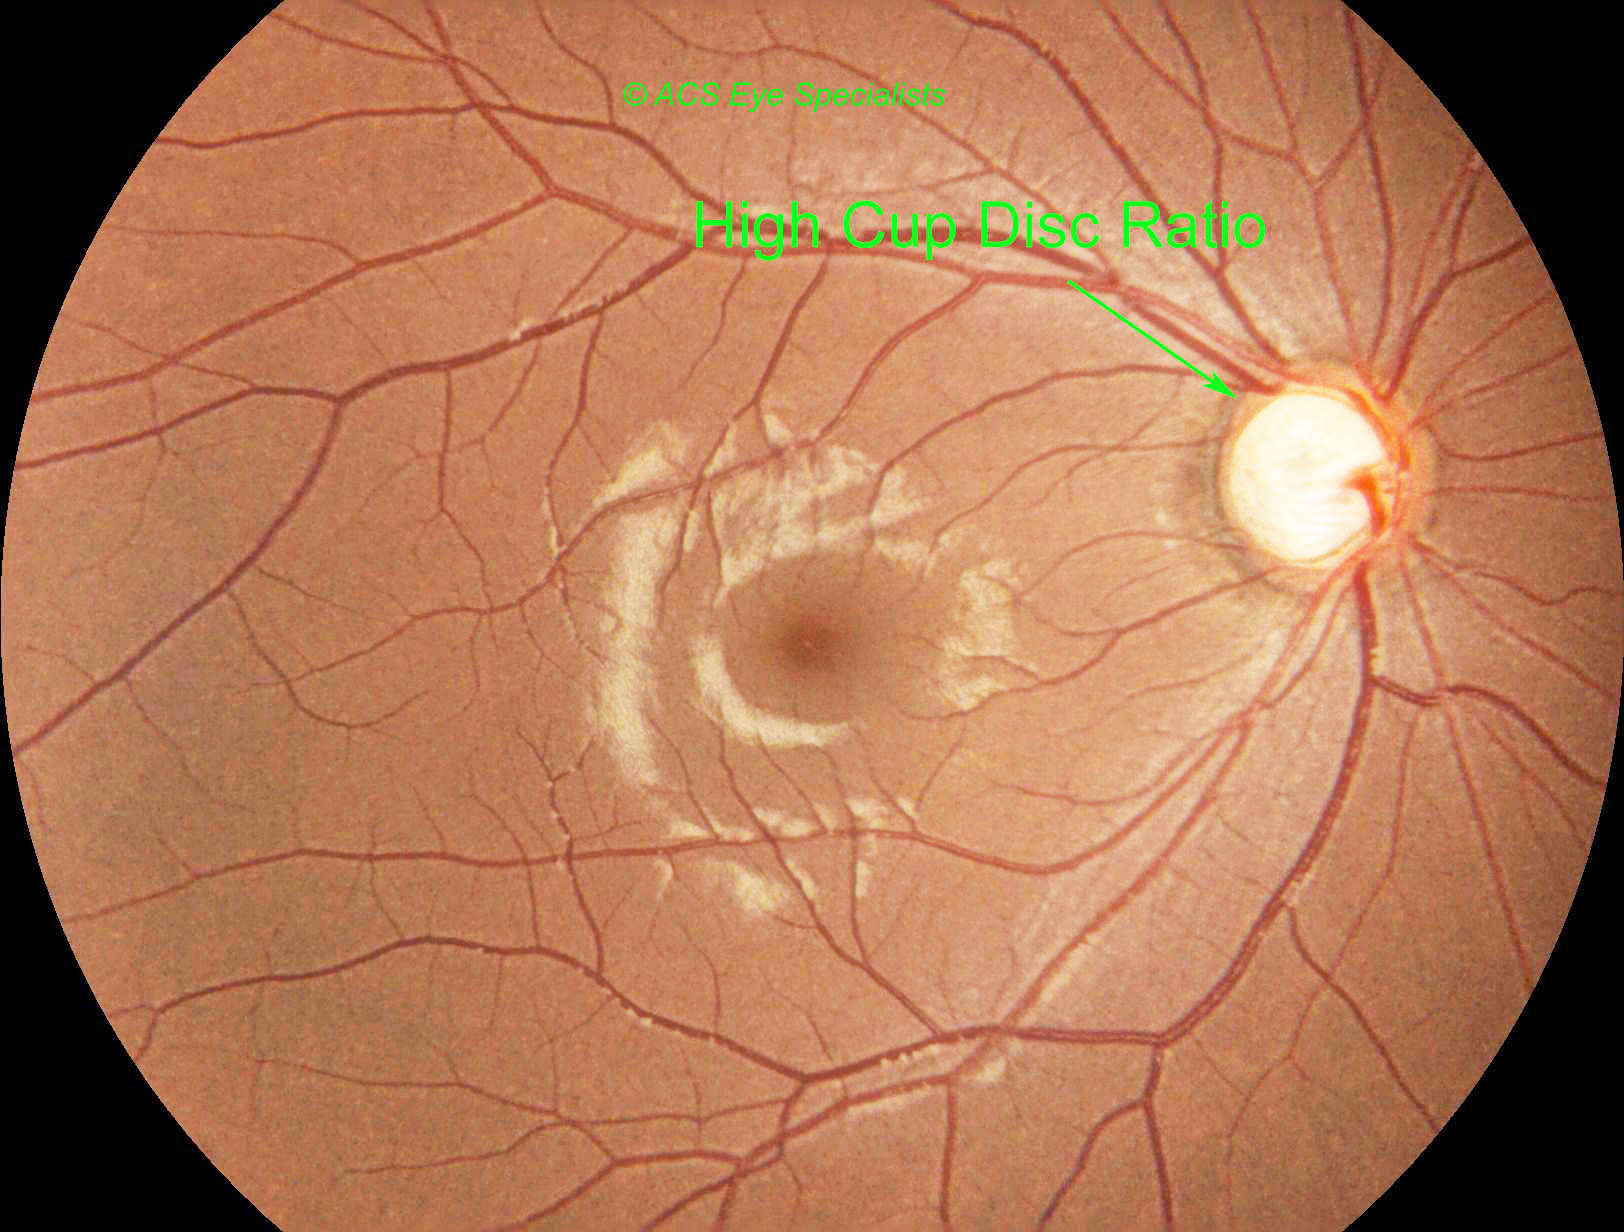 high cup disc ratio glaucoma